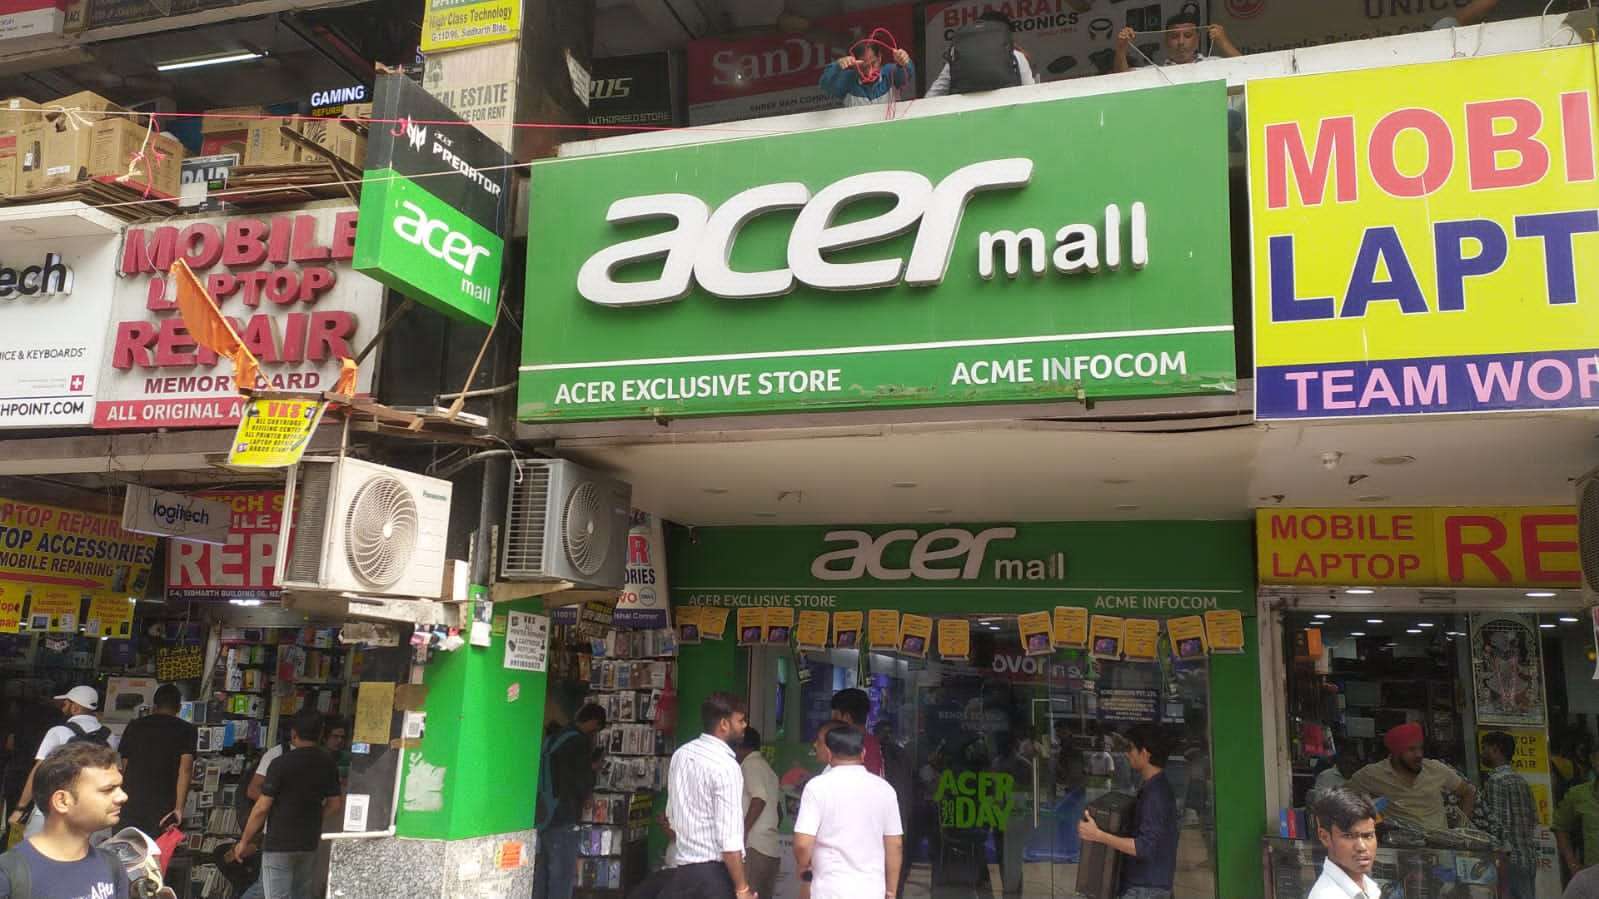 Acer Exclusive Store – Acme Infocom